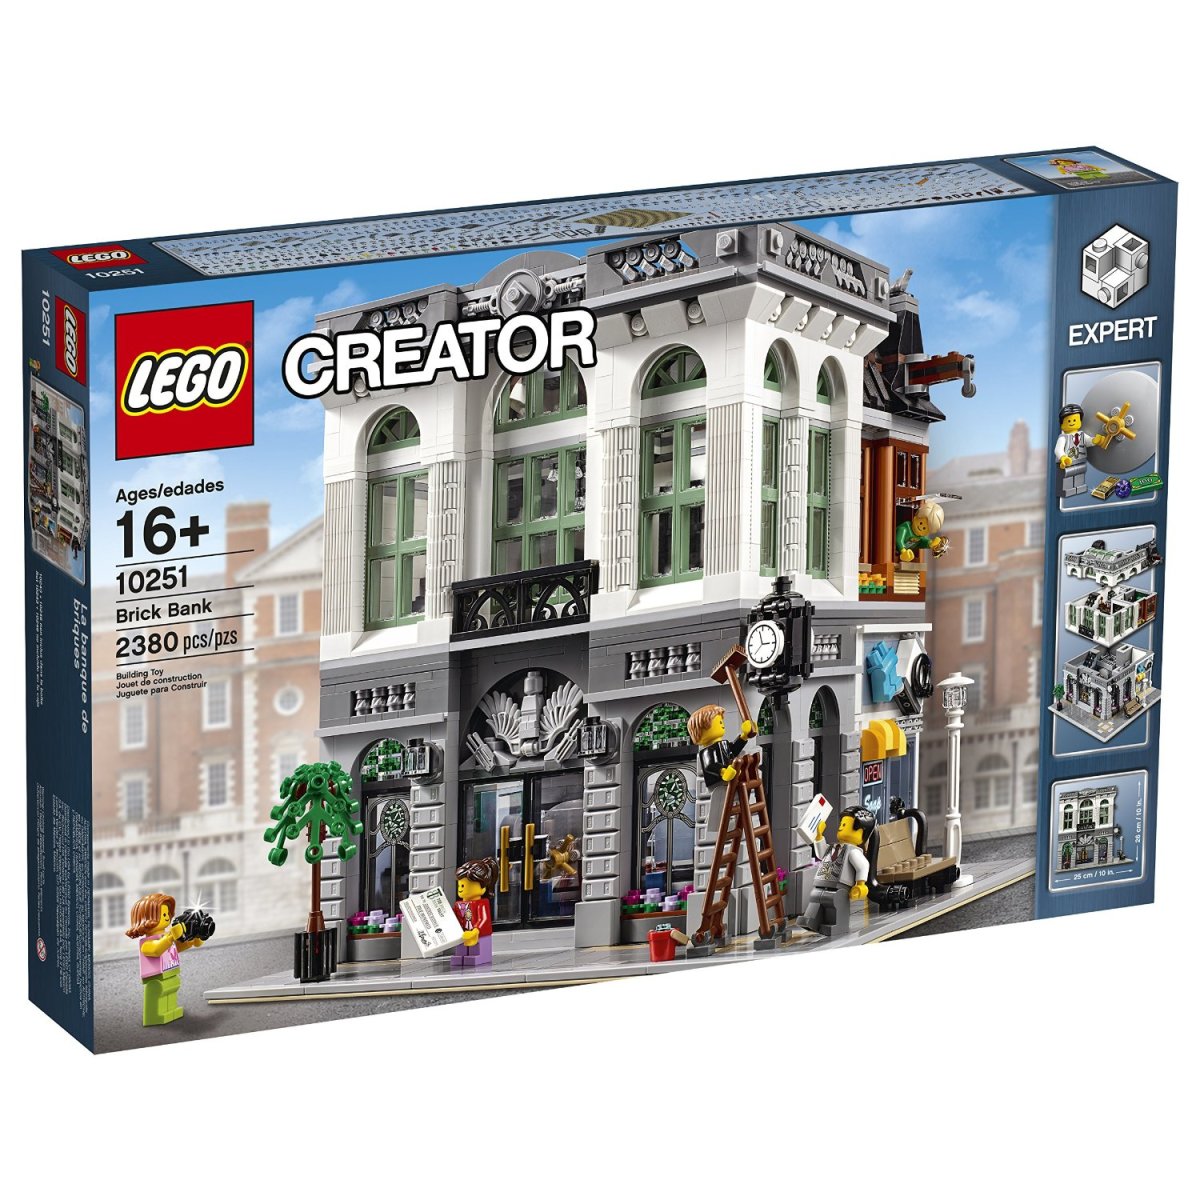 LEGO Creator Brick Bank Modular Building